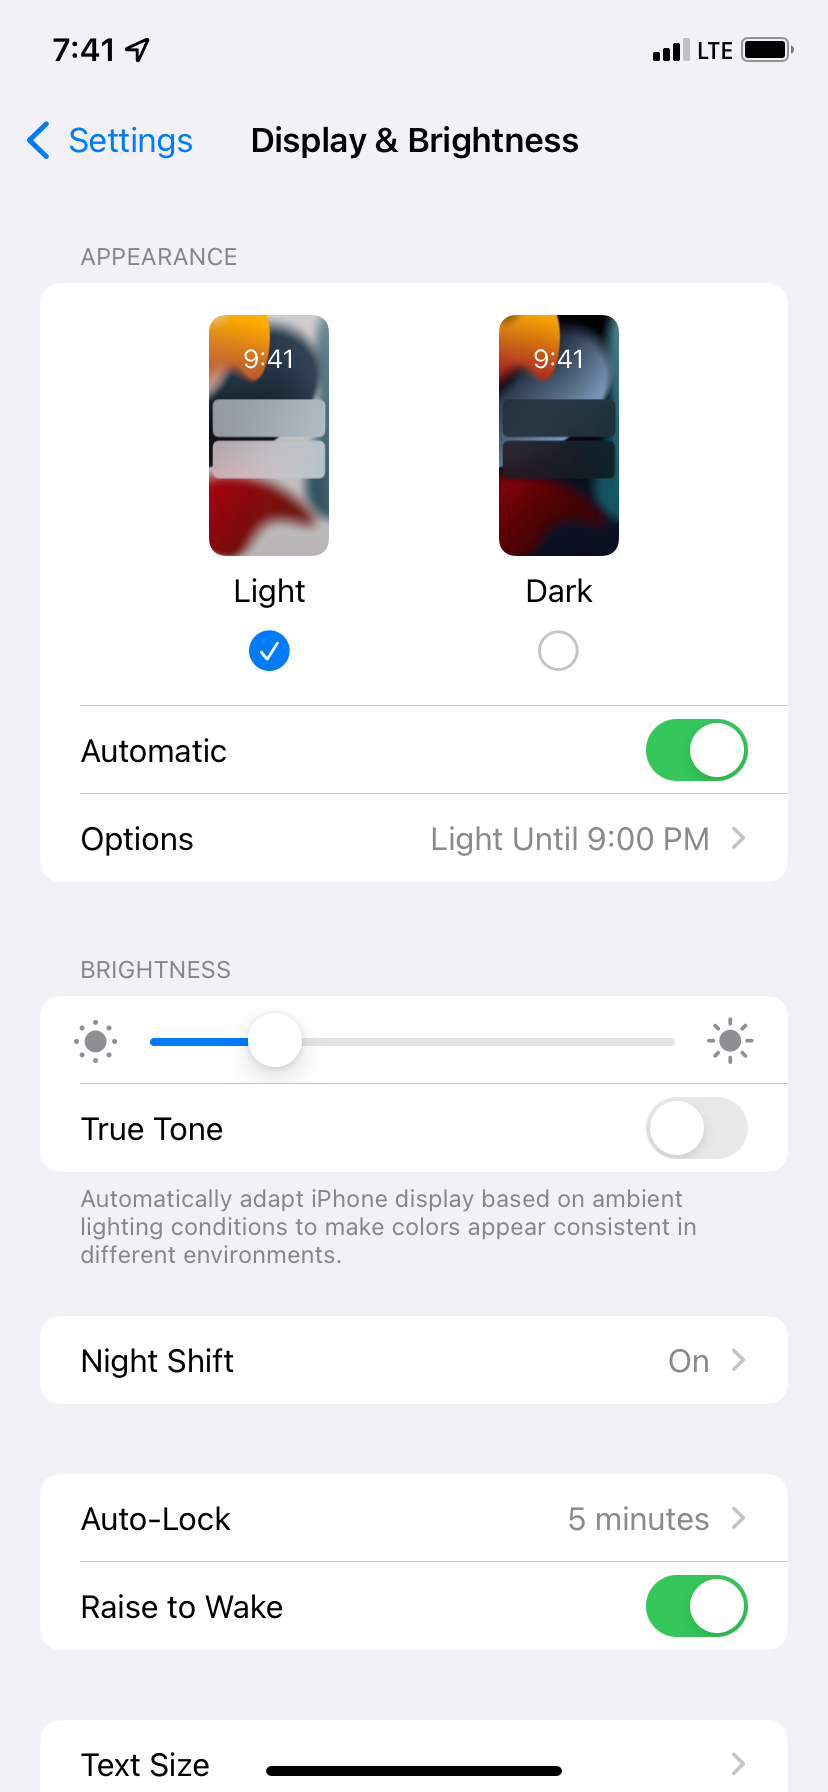 Display & Brightness Settings on iPhone